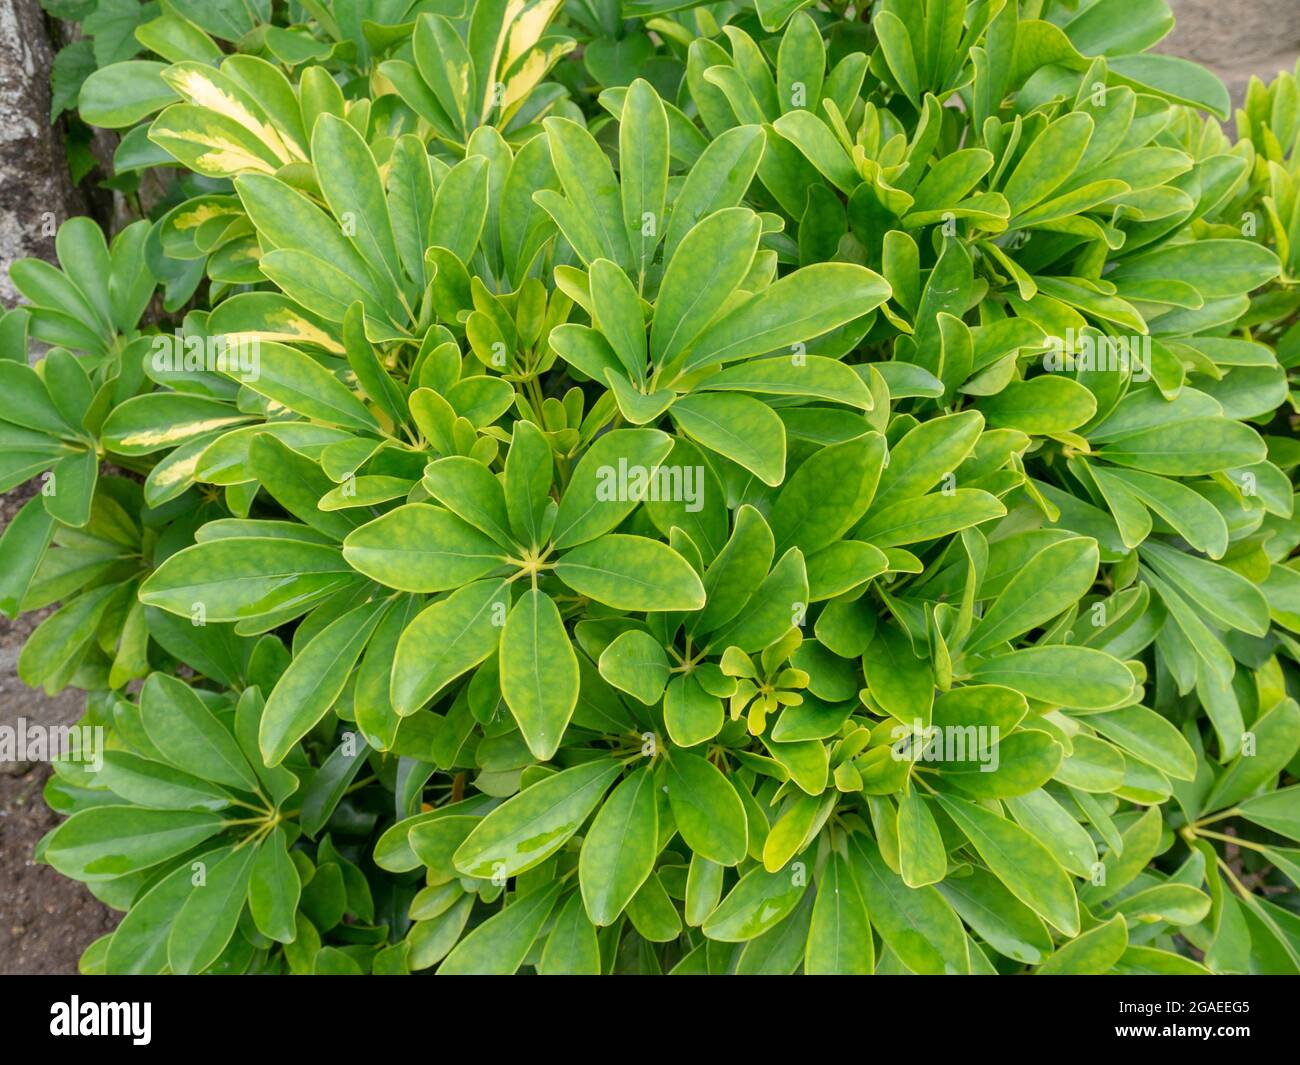 Schefflera arboricola or dwarf umbrella tree evergreen shrub plant. Green leaves with leaflets. Stock Photo